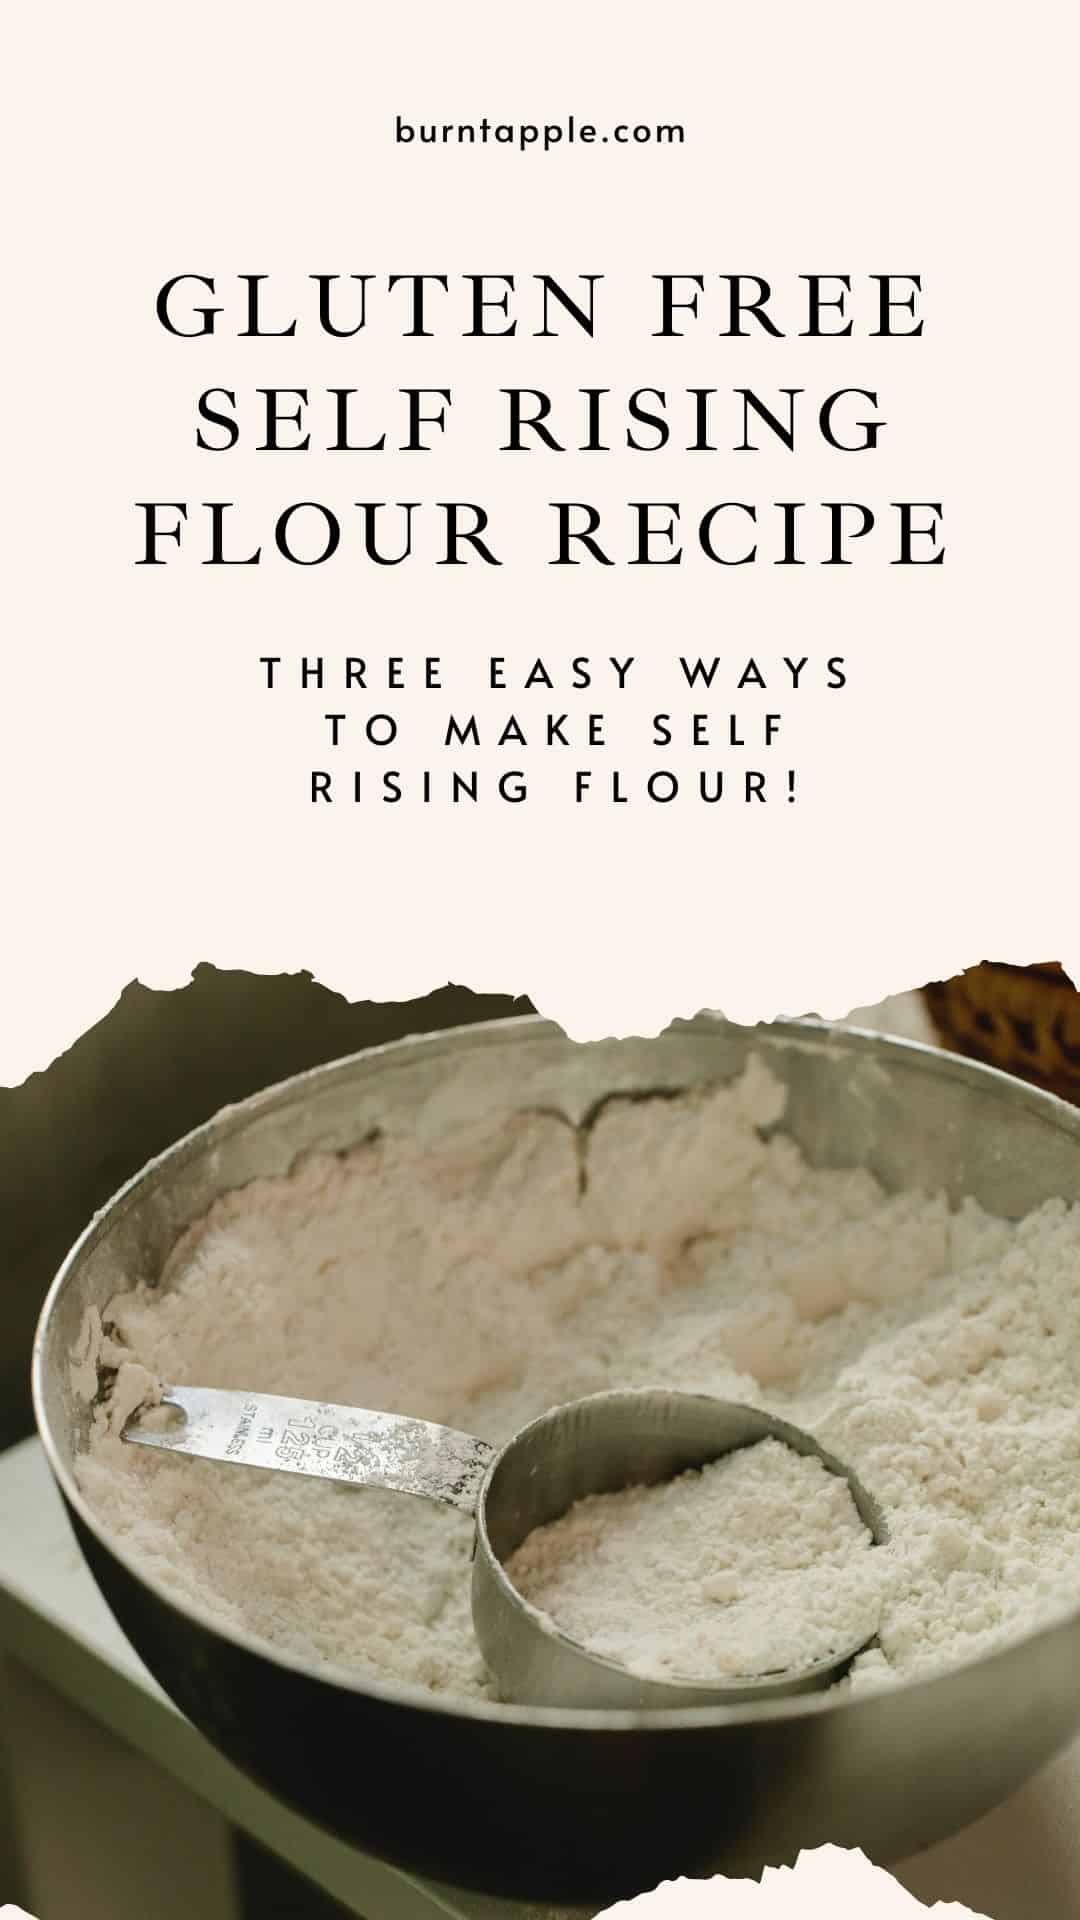 Gluten Free Self Rising Flour Recipe Burnt Apple